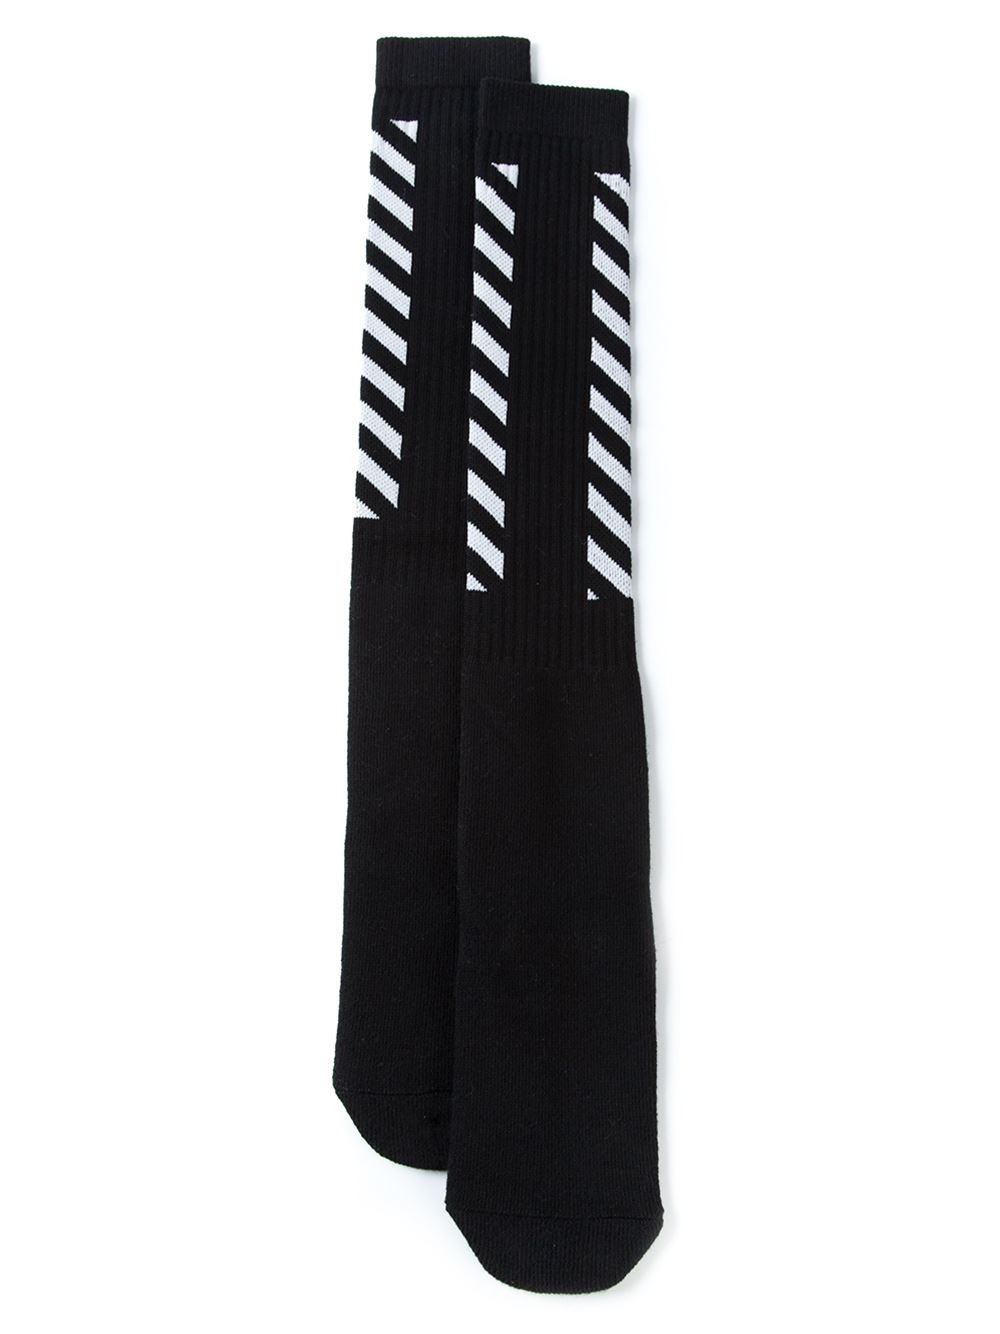 Off-White c/o Virgil Abloh Diagonal Stripe Socks in Black for Men - Lyst